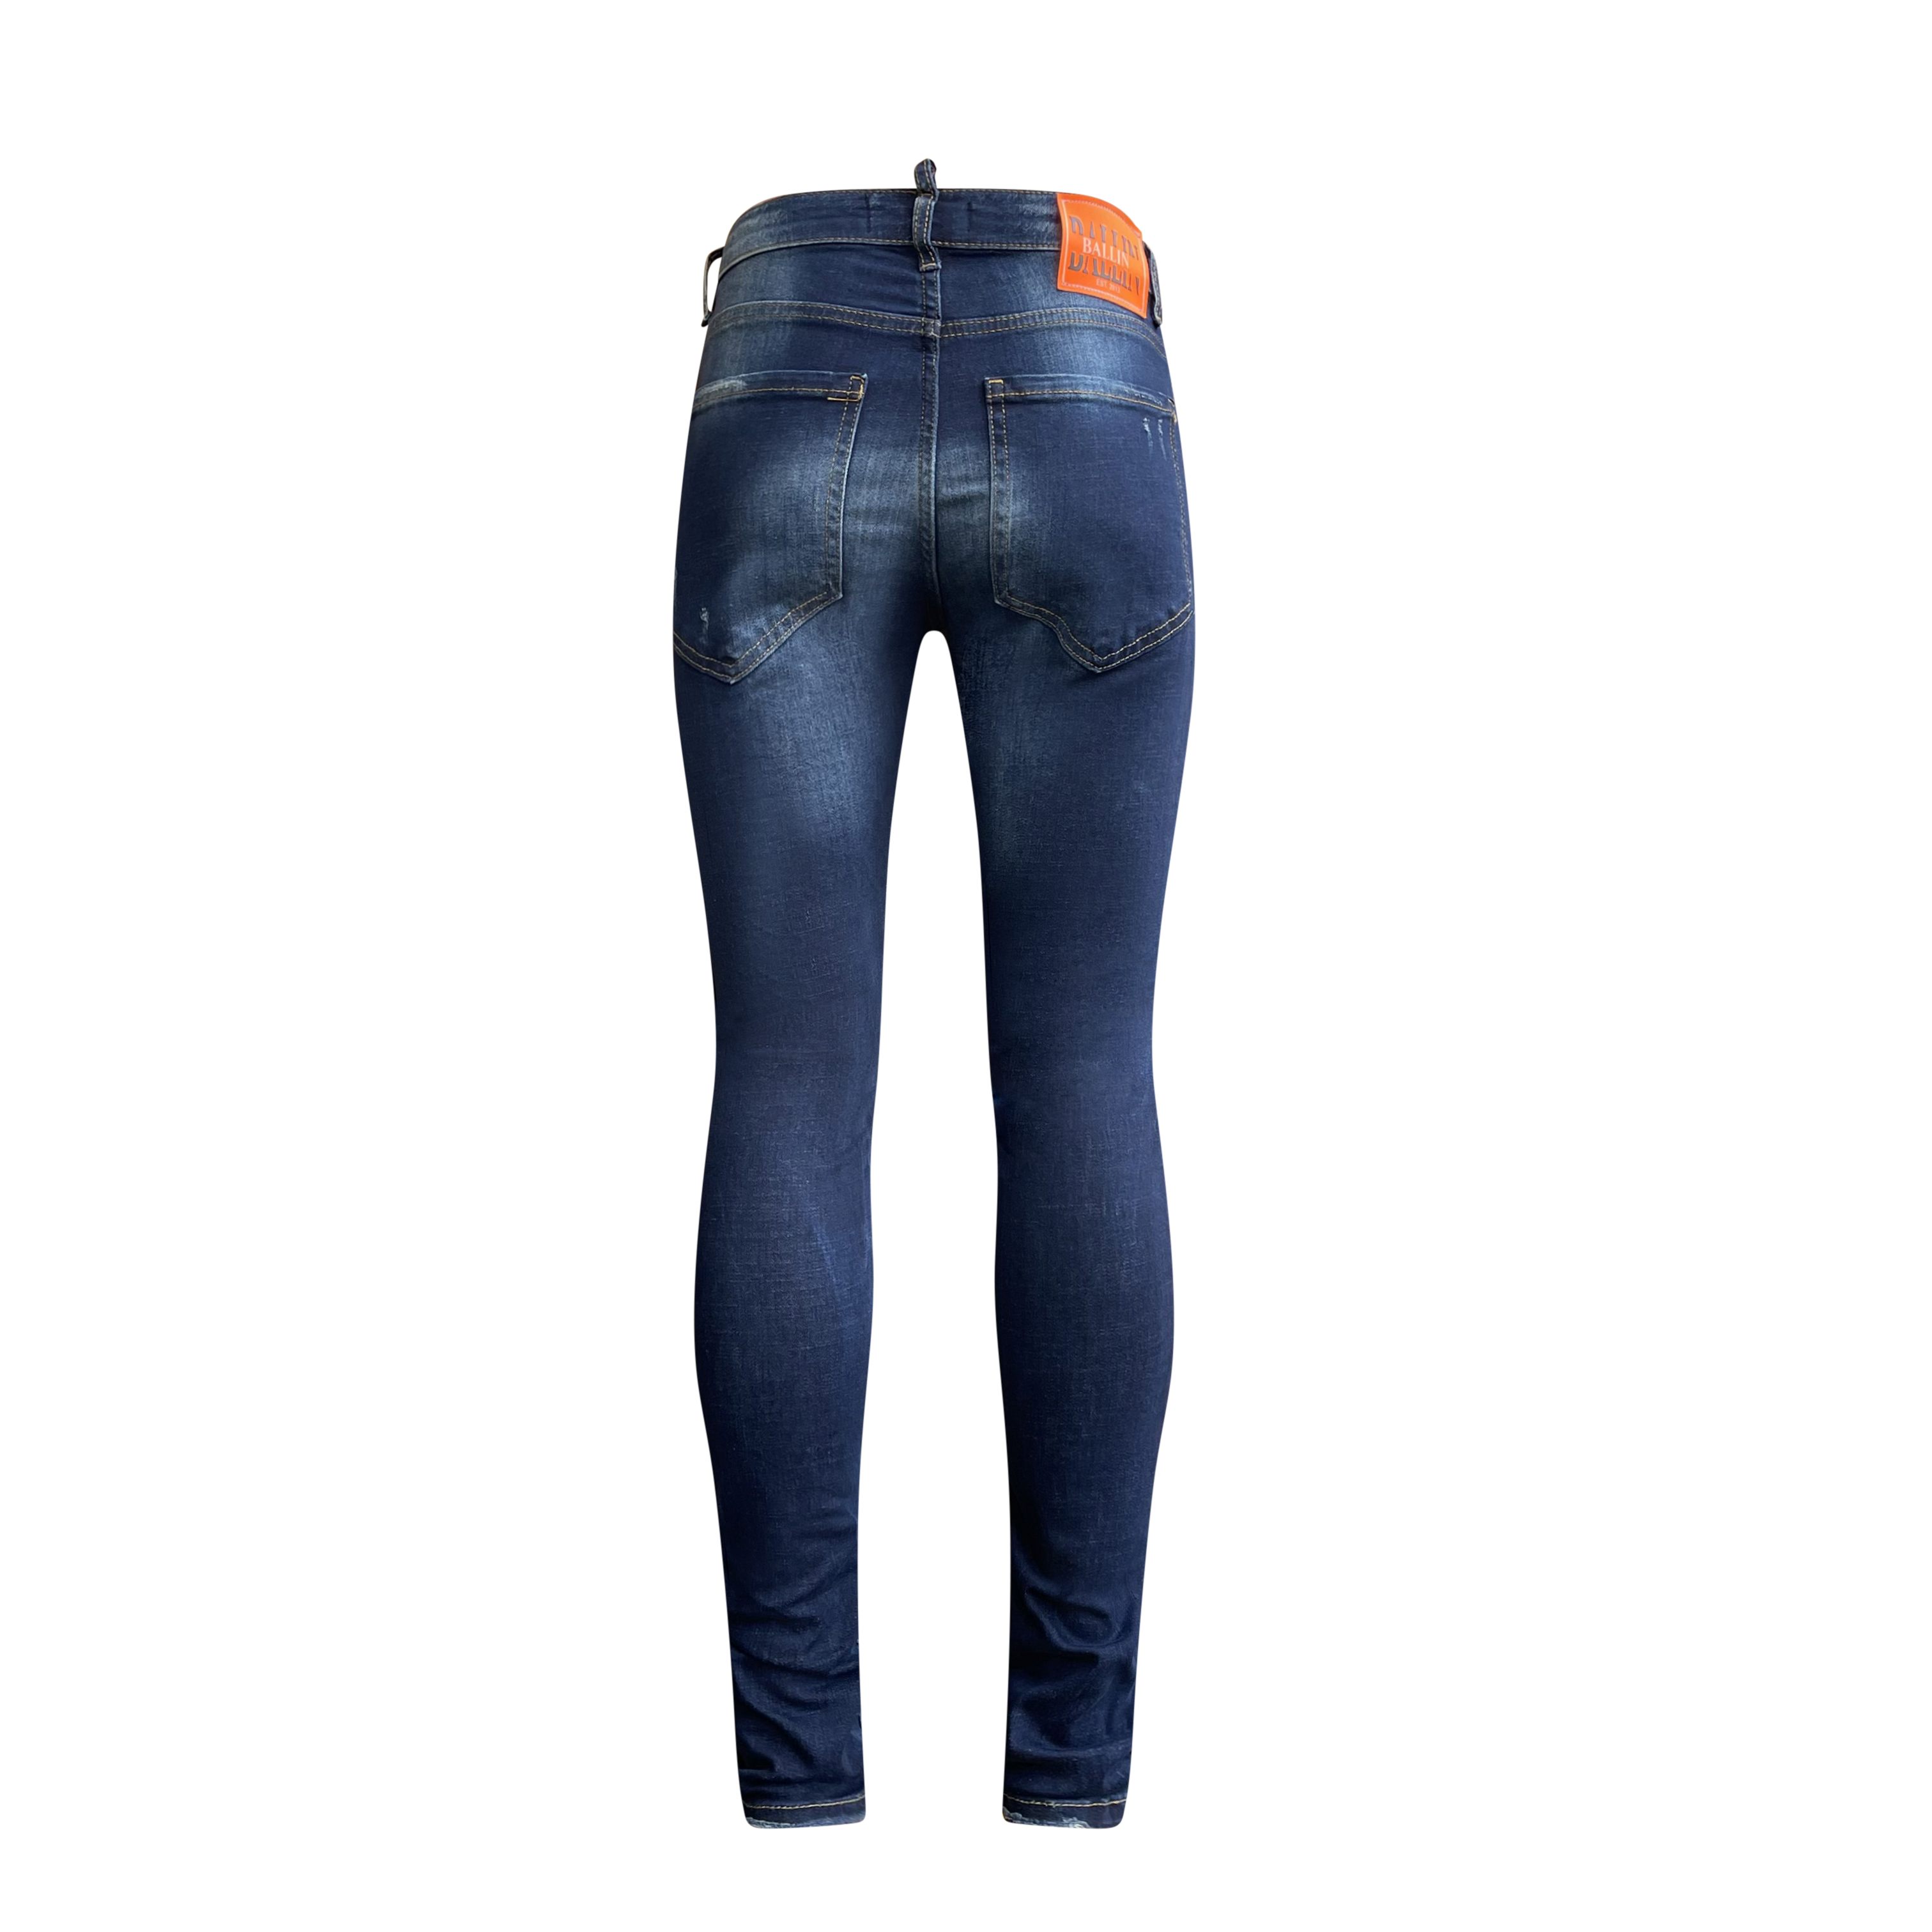 Skinny jeans heren Ballin donker blauw - Streetfashion 86